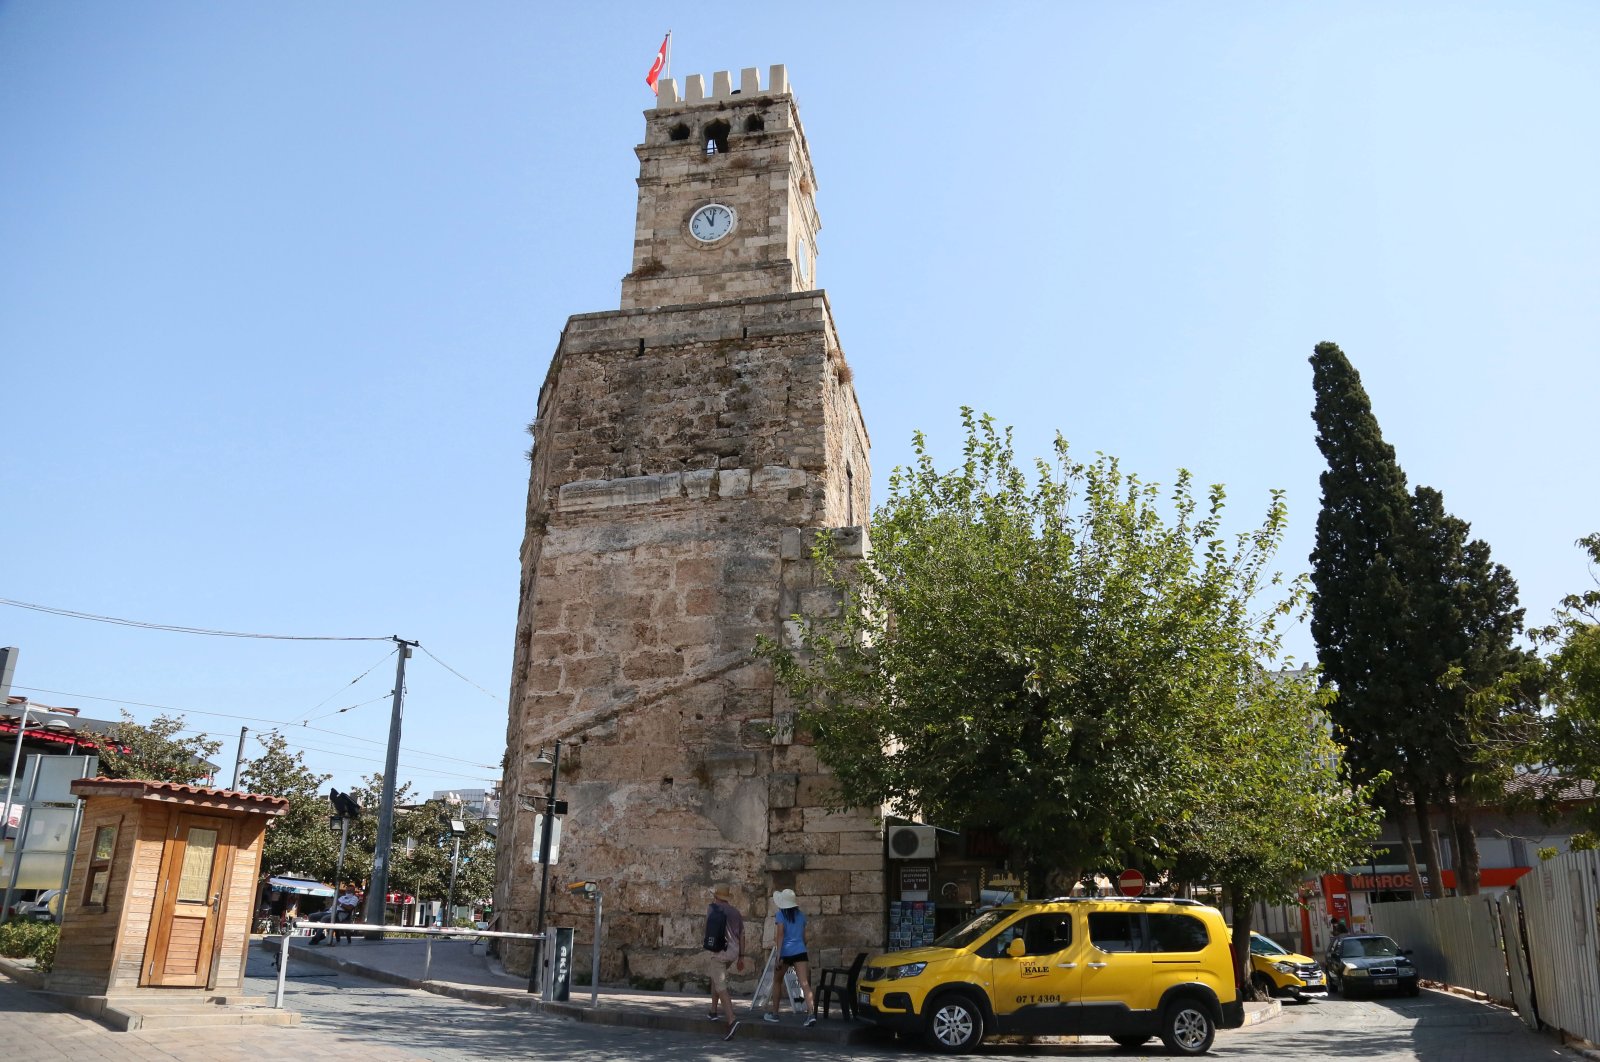 Restorasi mengungkapkan pencurian berusia puluhan tahun dari menara jam di Turki